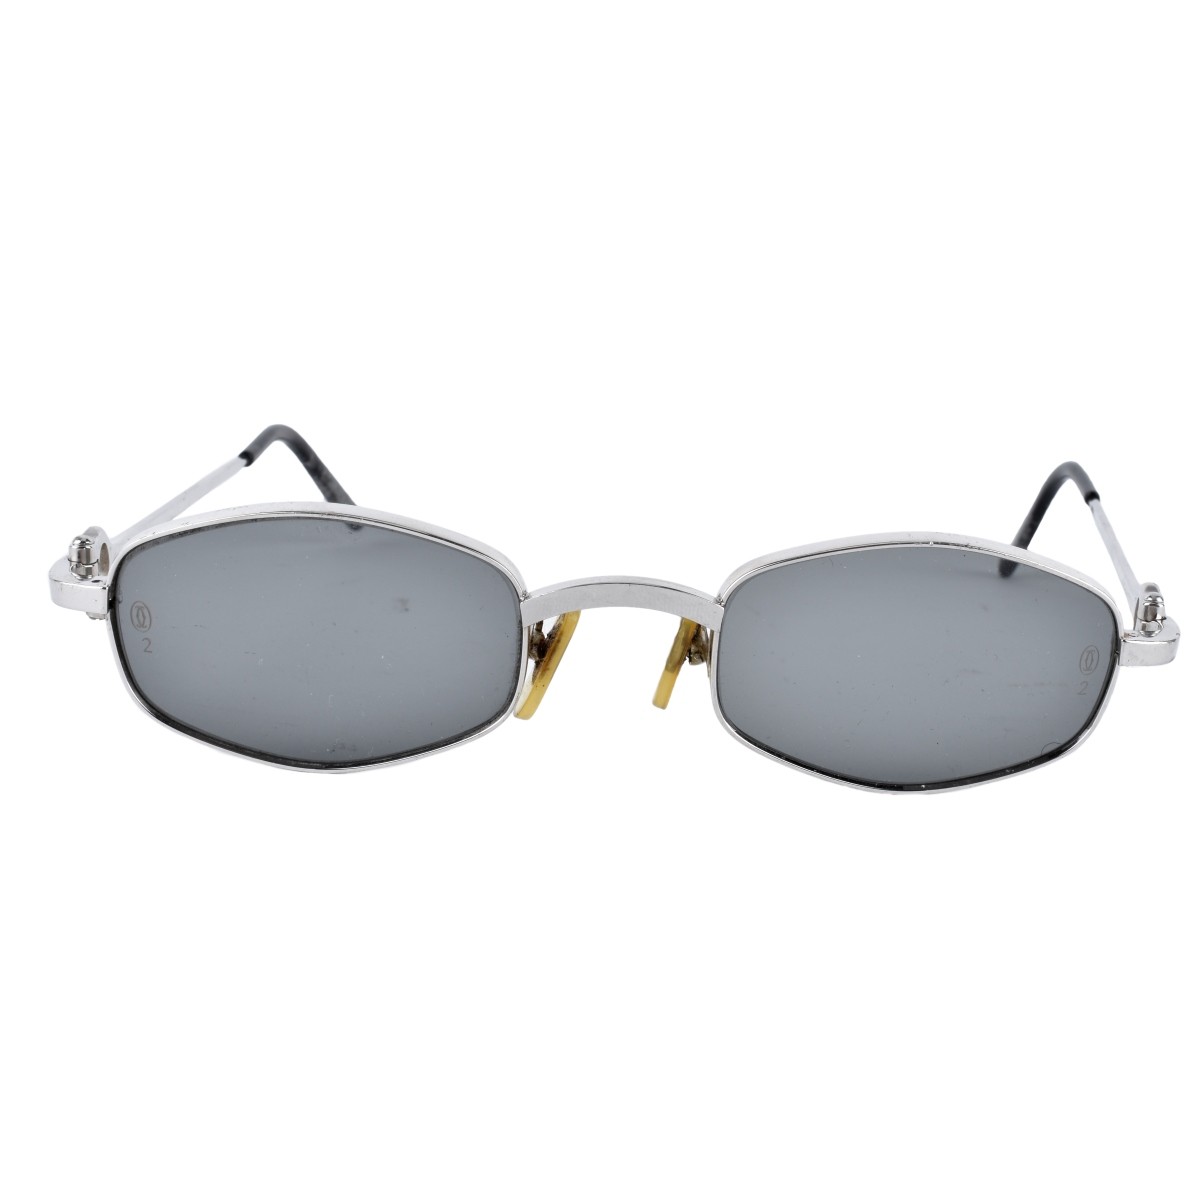 Pair Cartier Sunglasses.